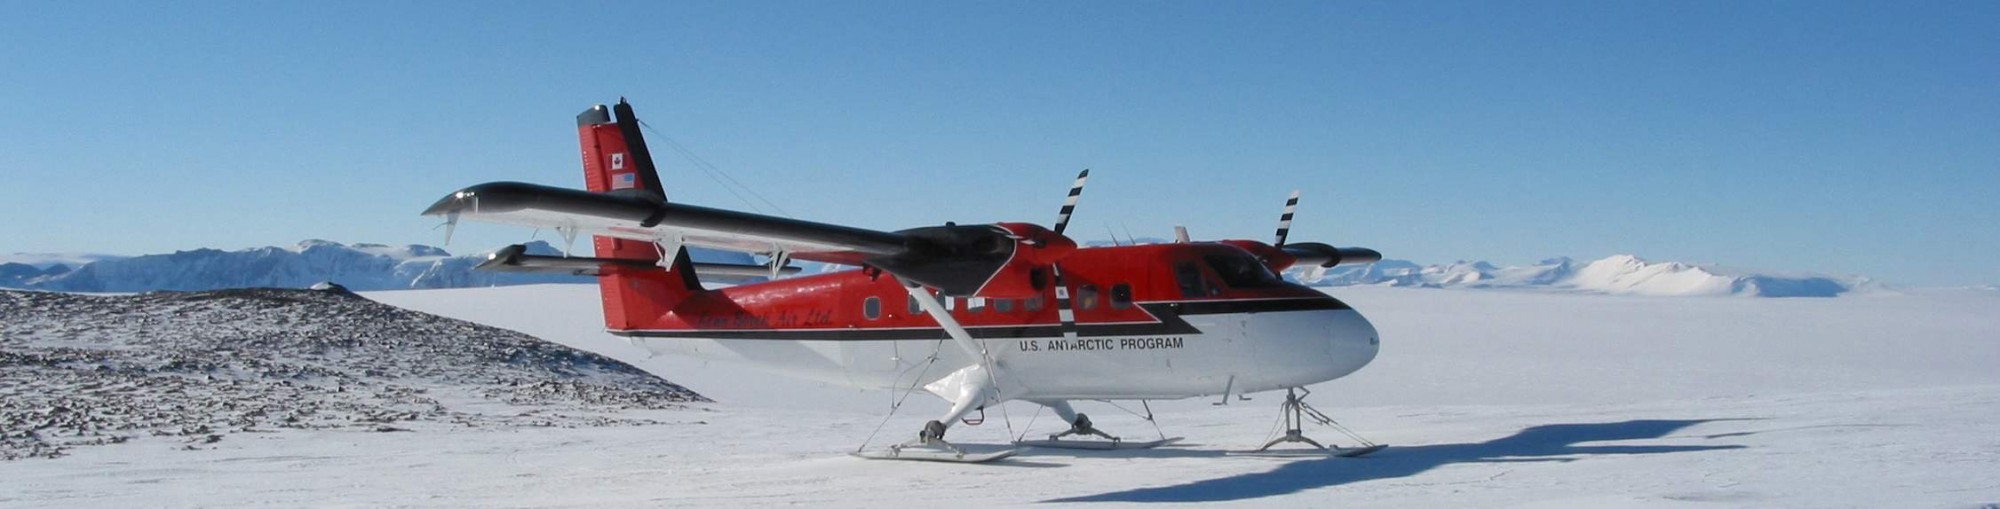 Twin Otter airplane at Westhaven Nunatak